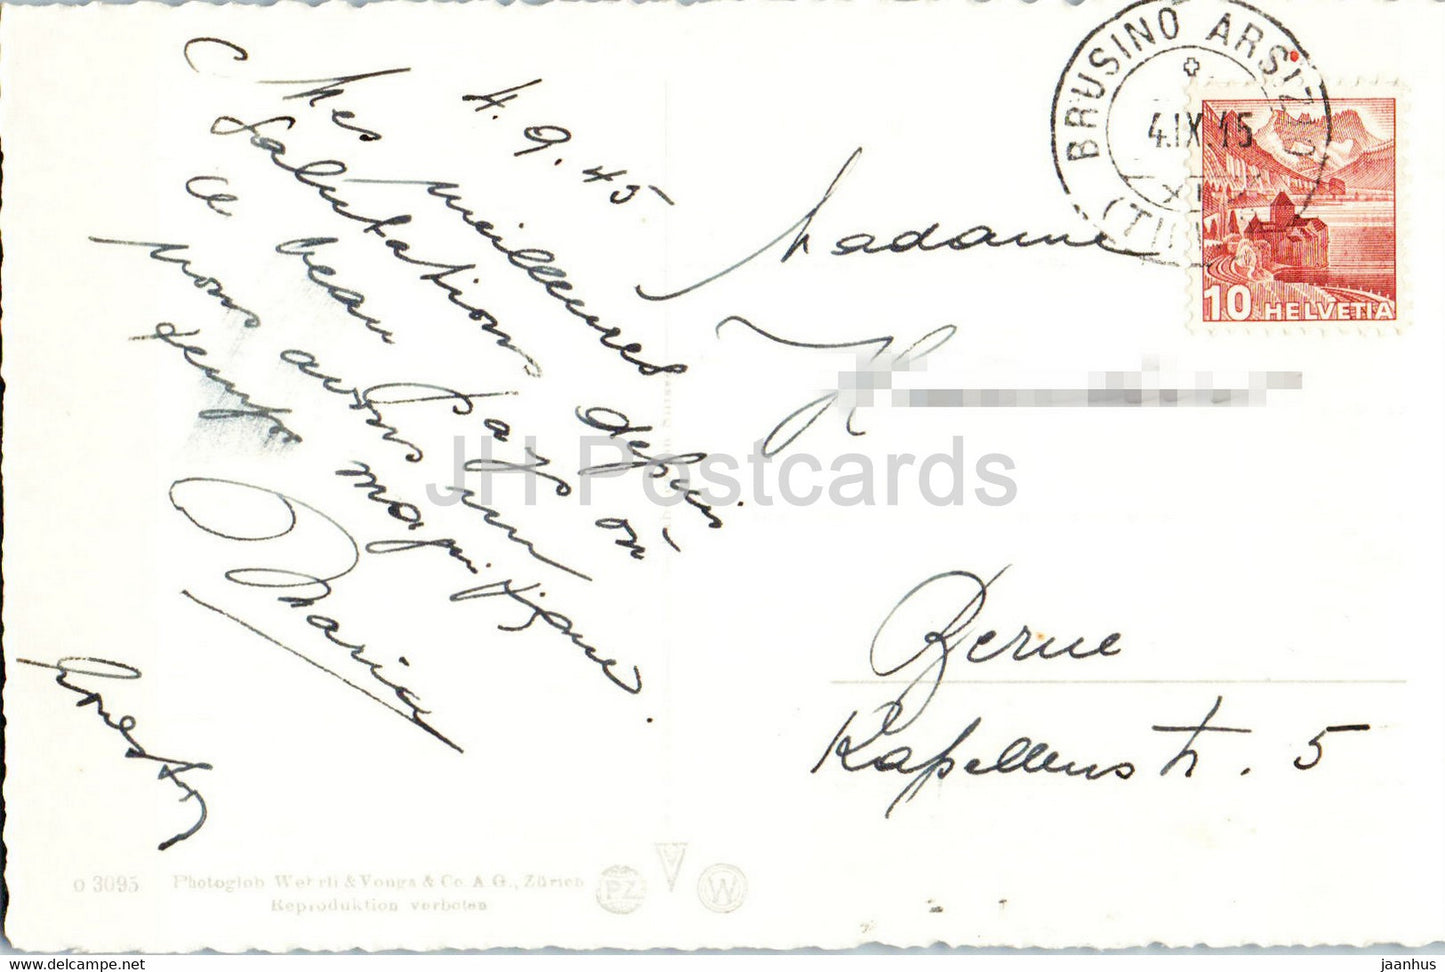 Morcote - 3095 - 1945 - old postcard - Switzerland - used